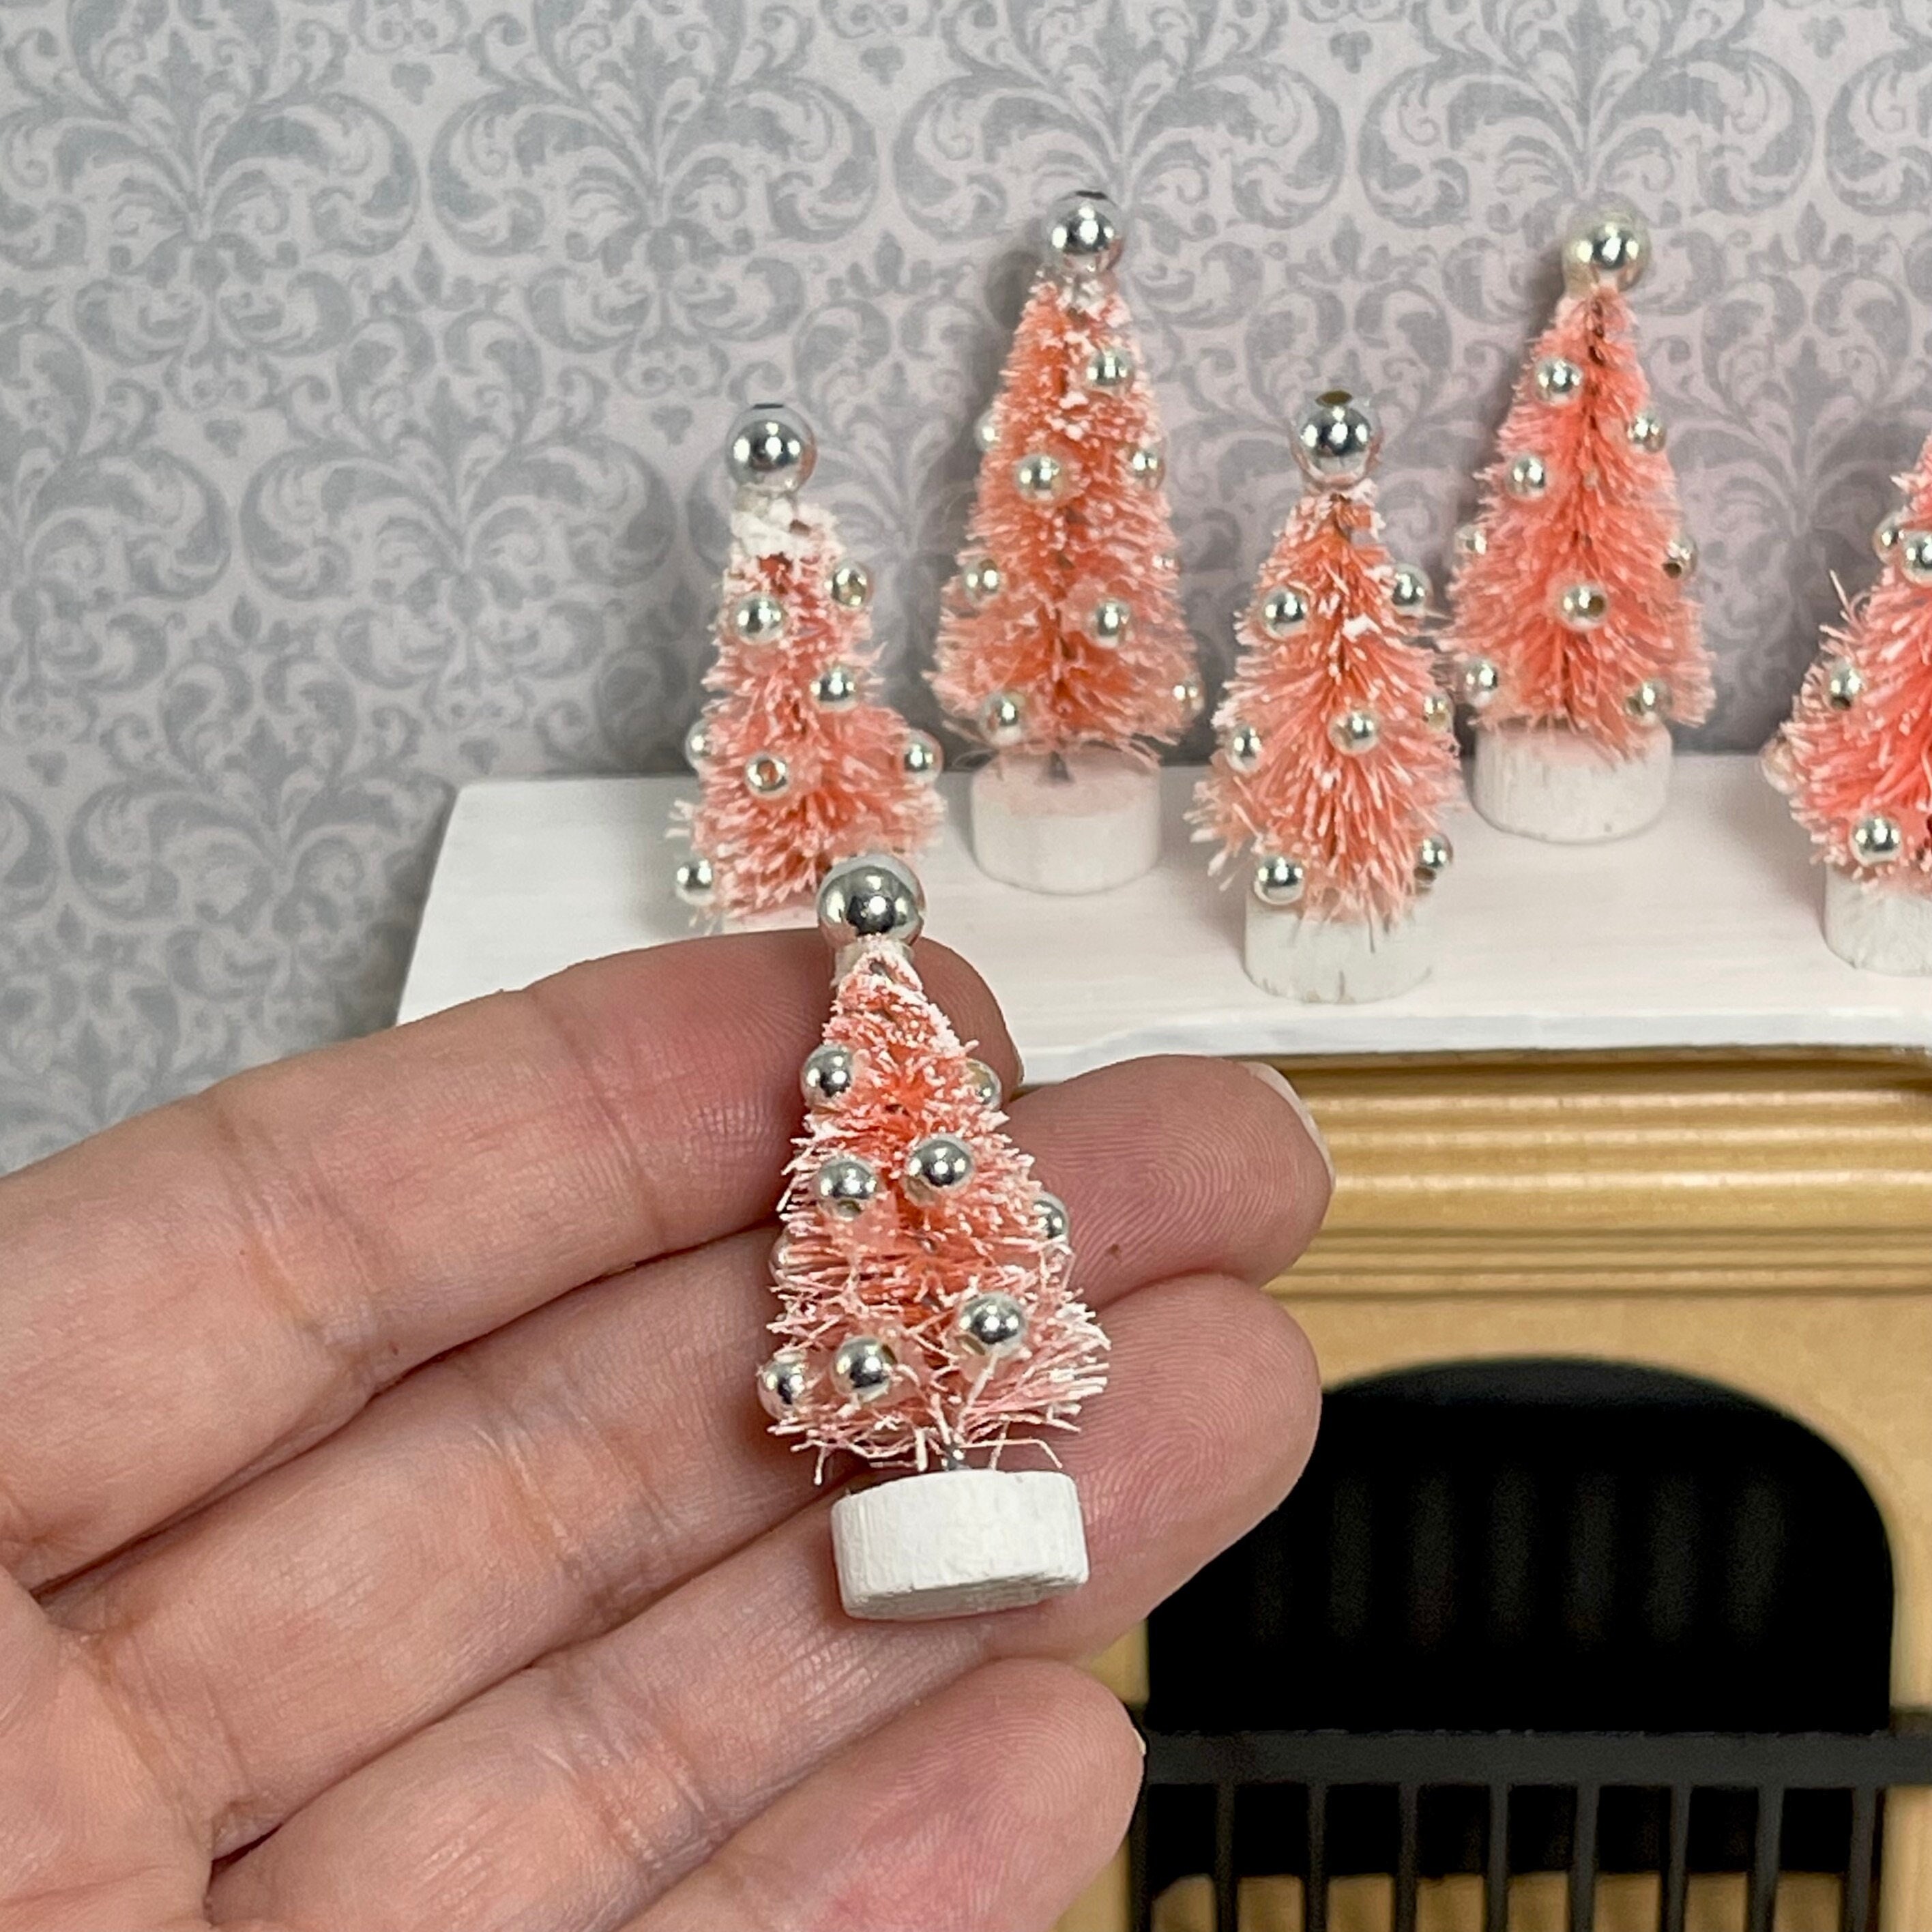 Miniature Christmas Tree, Tiny Christmas, Fairy Garden Accessories Supply,  Sisal Bottle Brush Vintage Style Tree, Dollhouse Decorations 